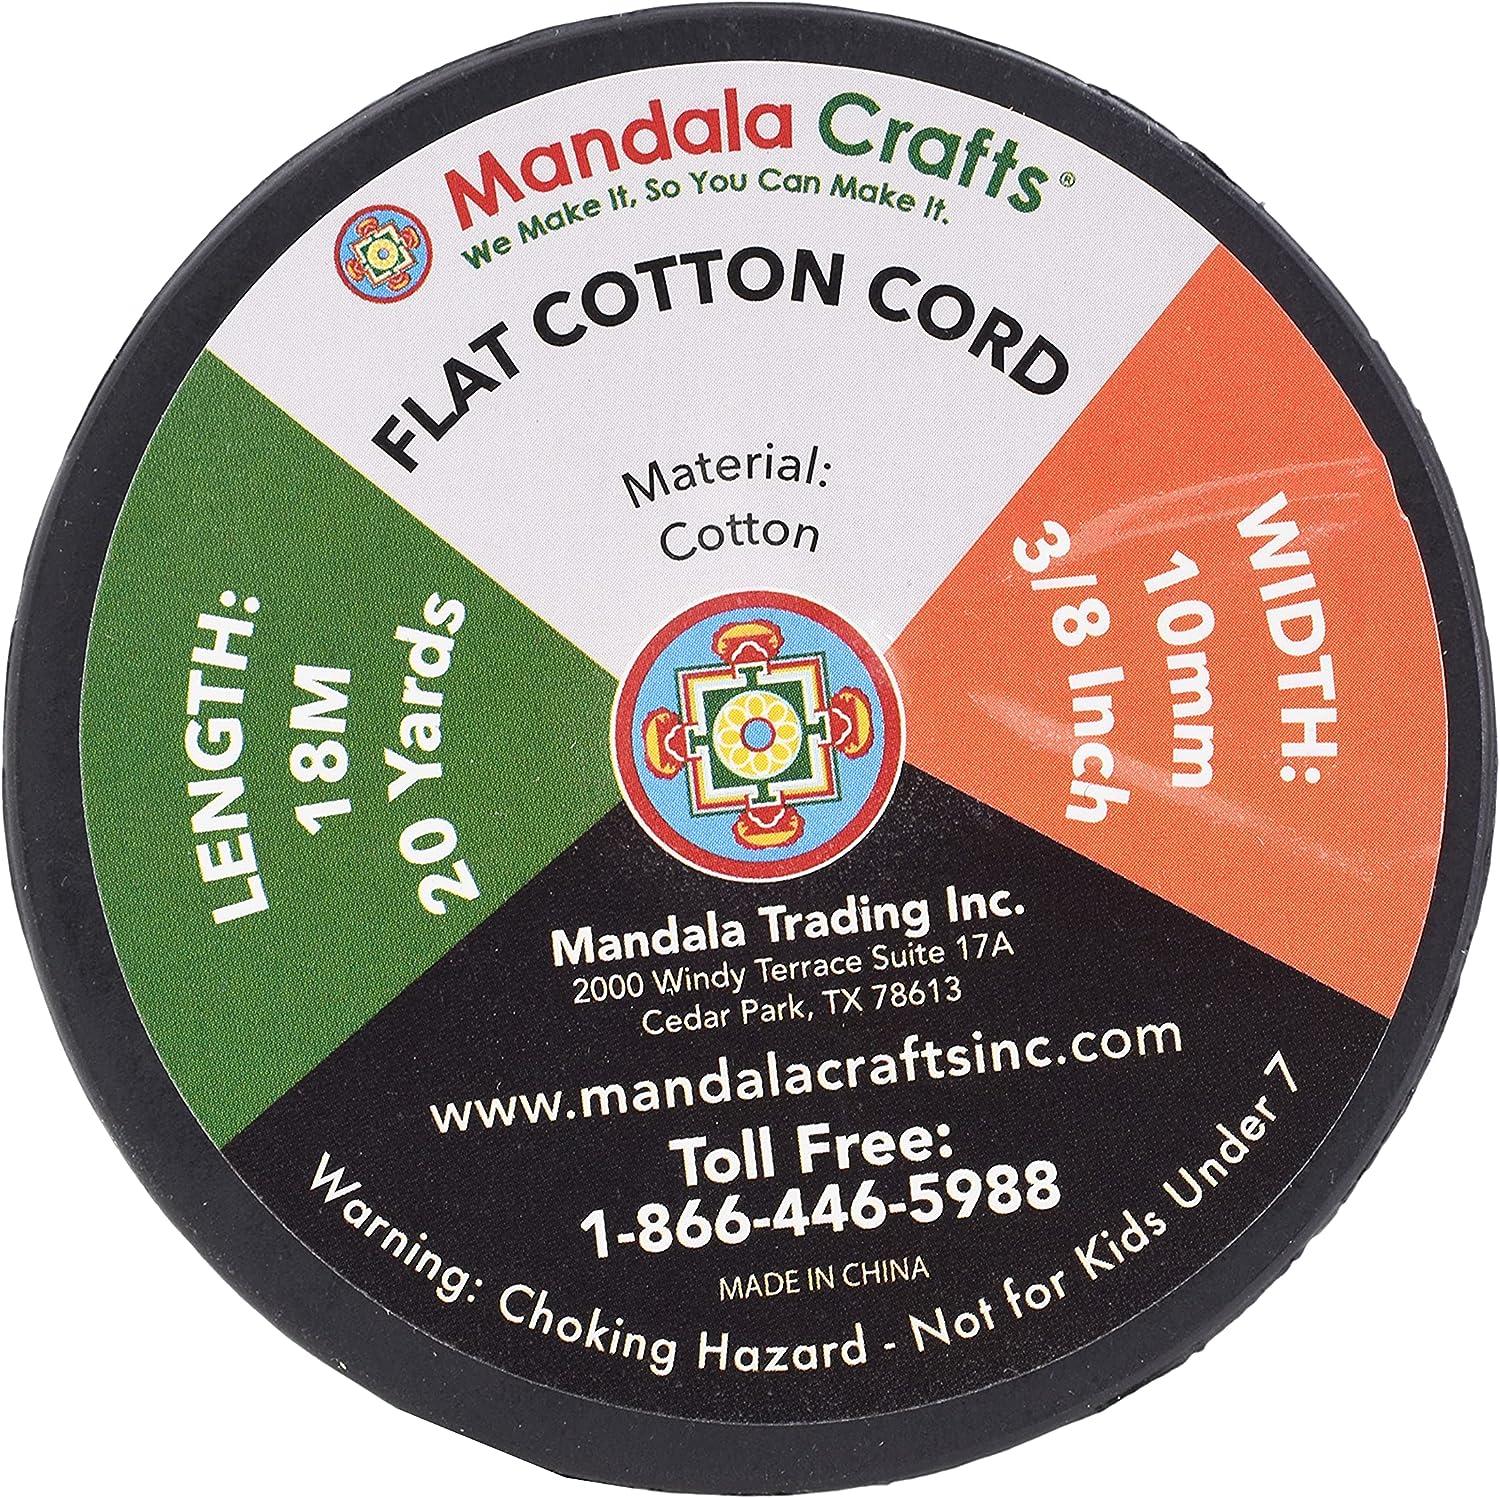 Mandala Crafts Flat Drawstring Cord Drawstring Replacement, 1/2